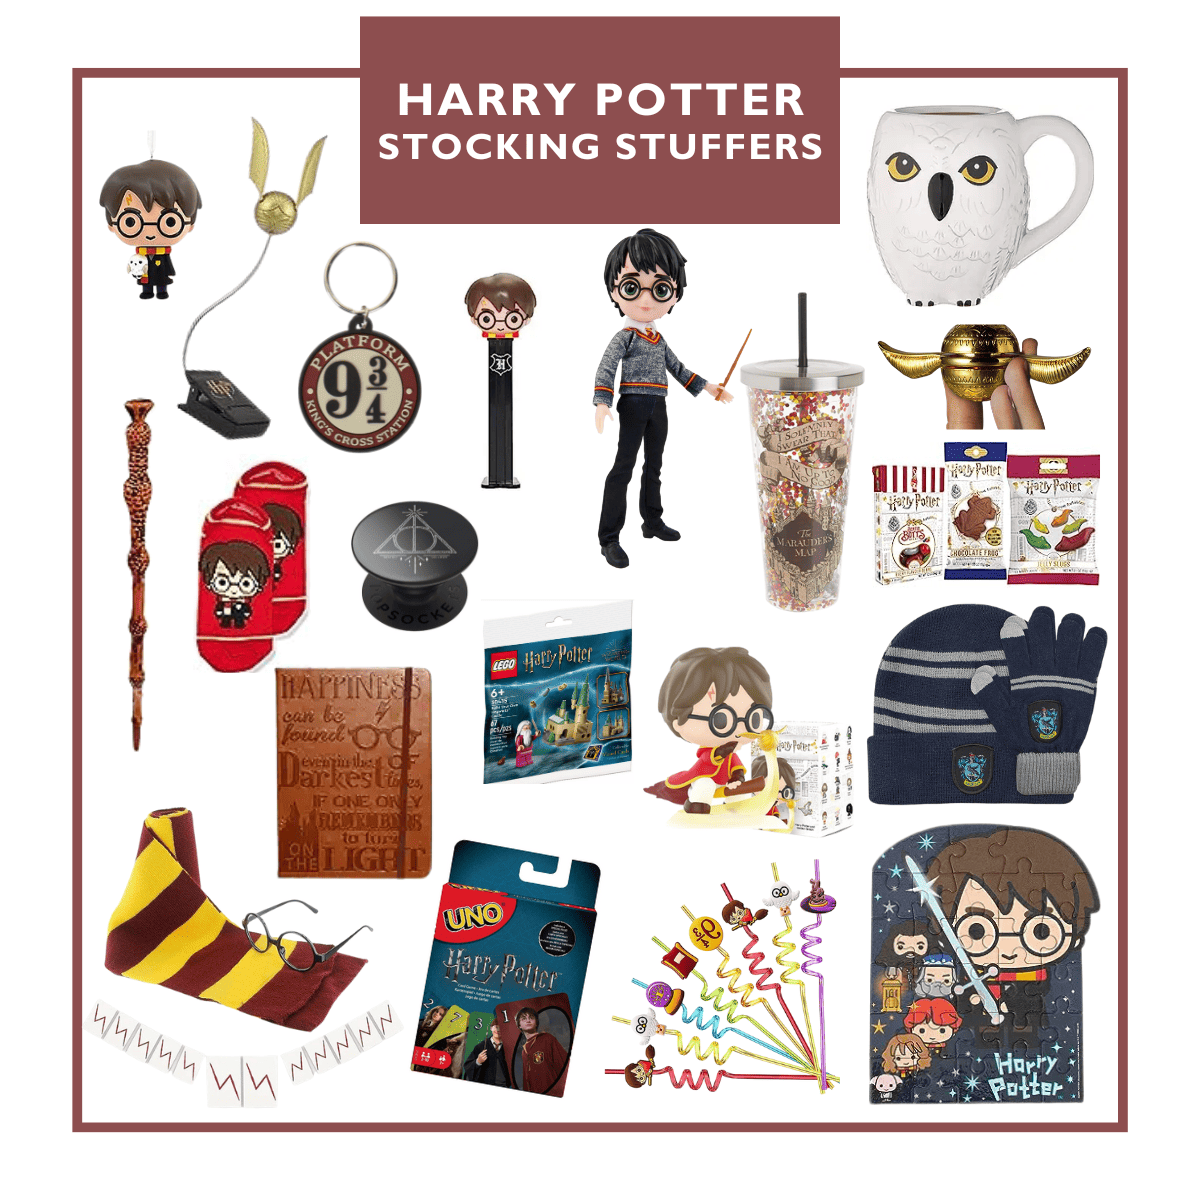 50 Best Harry Potter Stocking Stuffers for Kids